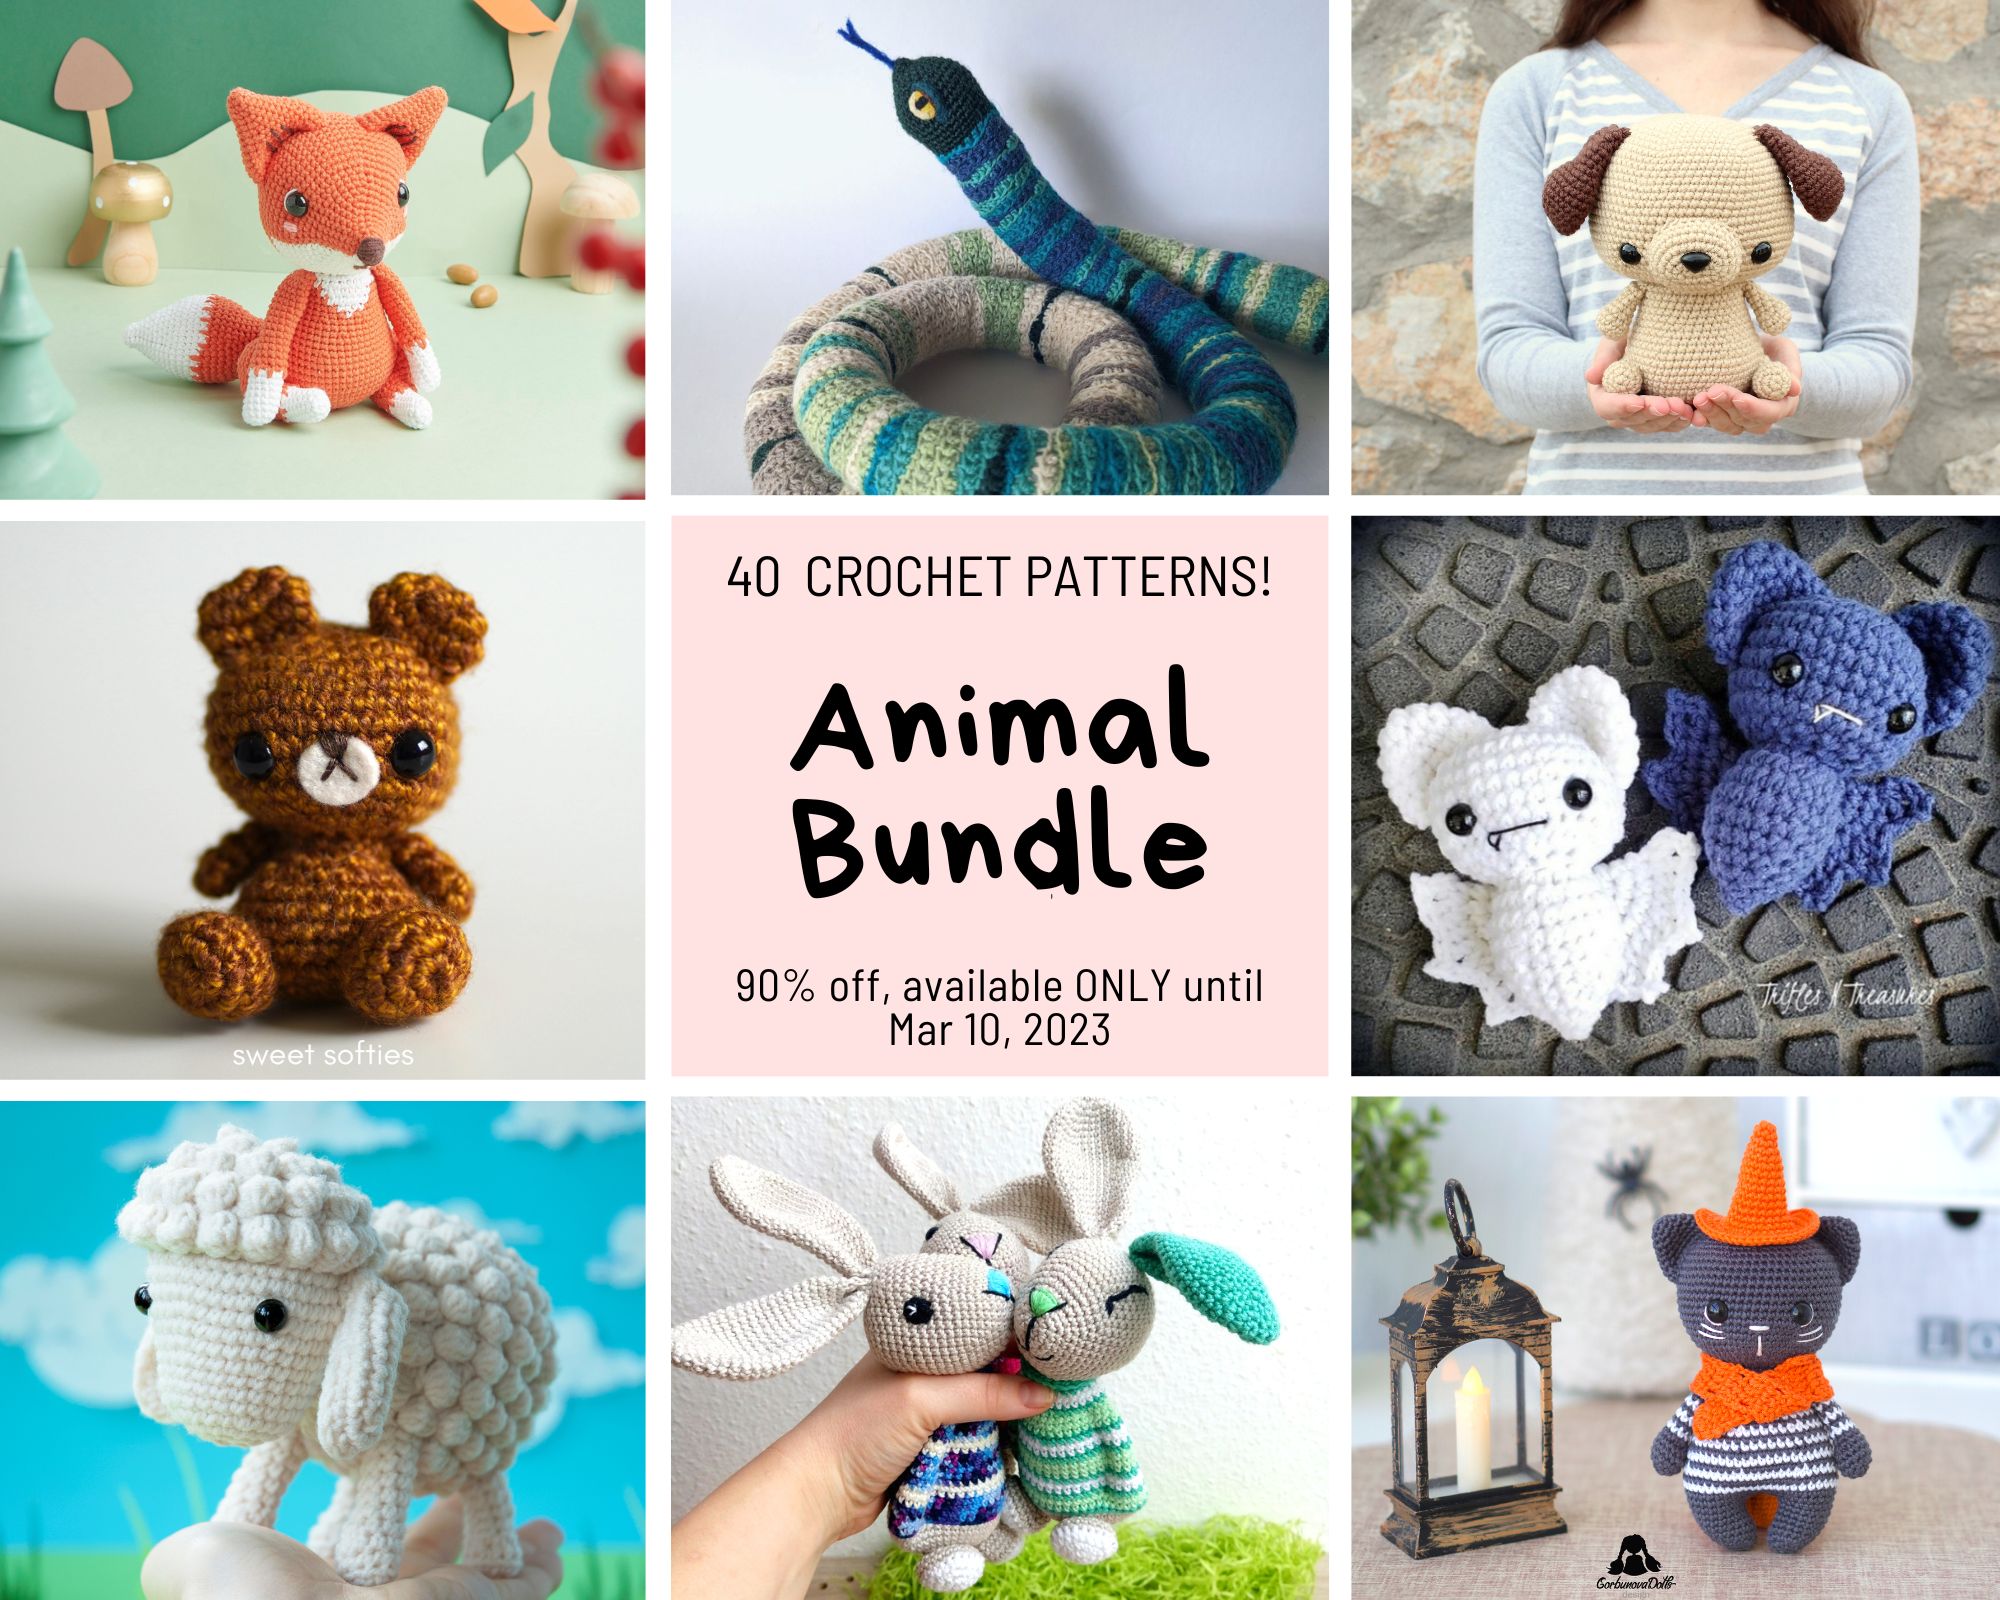 Buy Mini Travel Crochet Hooks / Key Ring  Shop Needlework Tools Online –  Craft Vanity